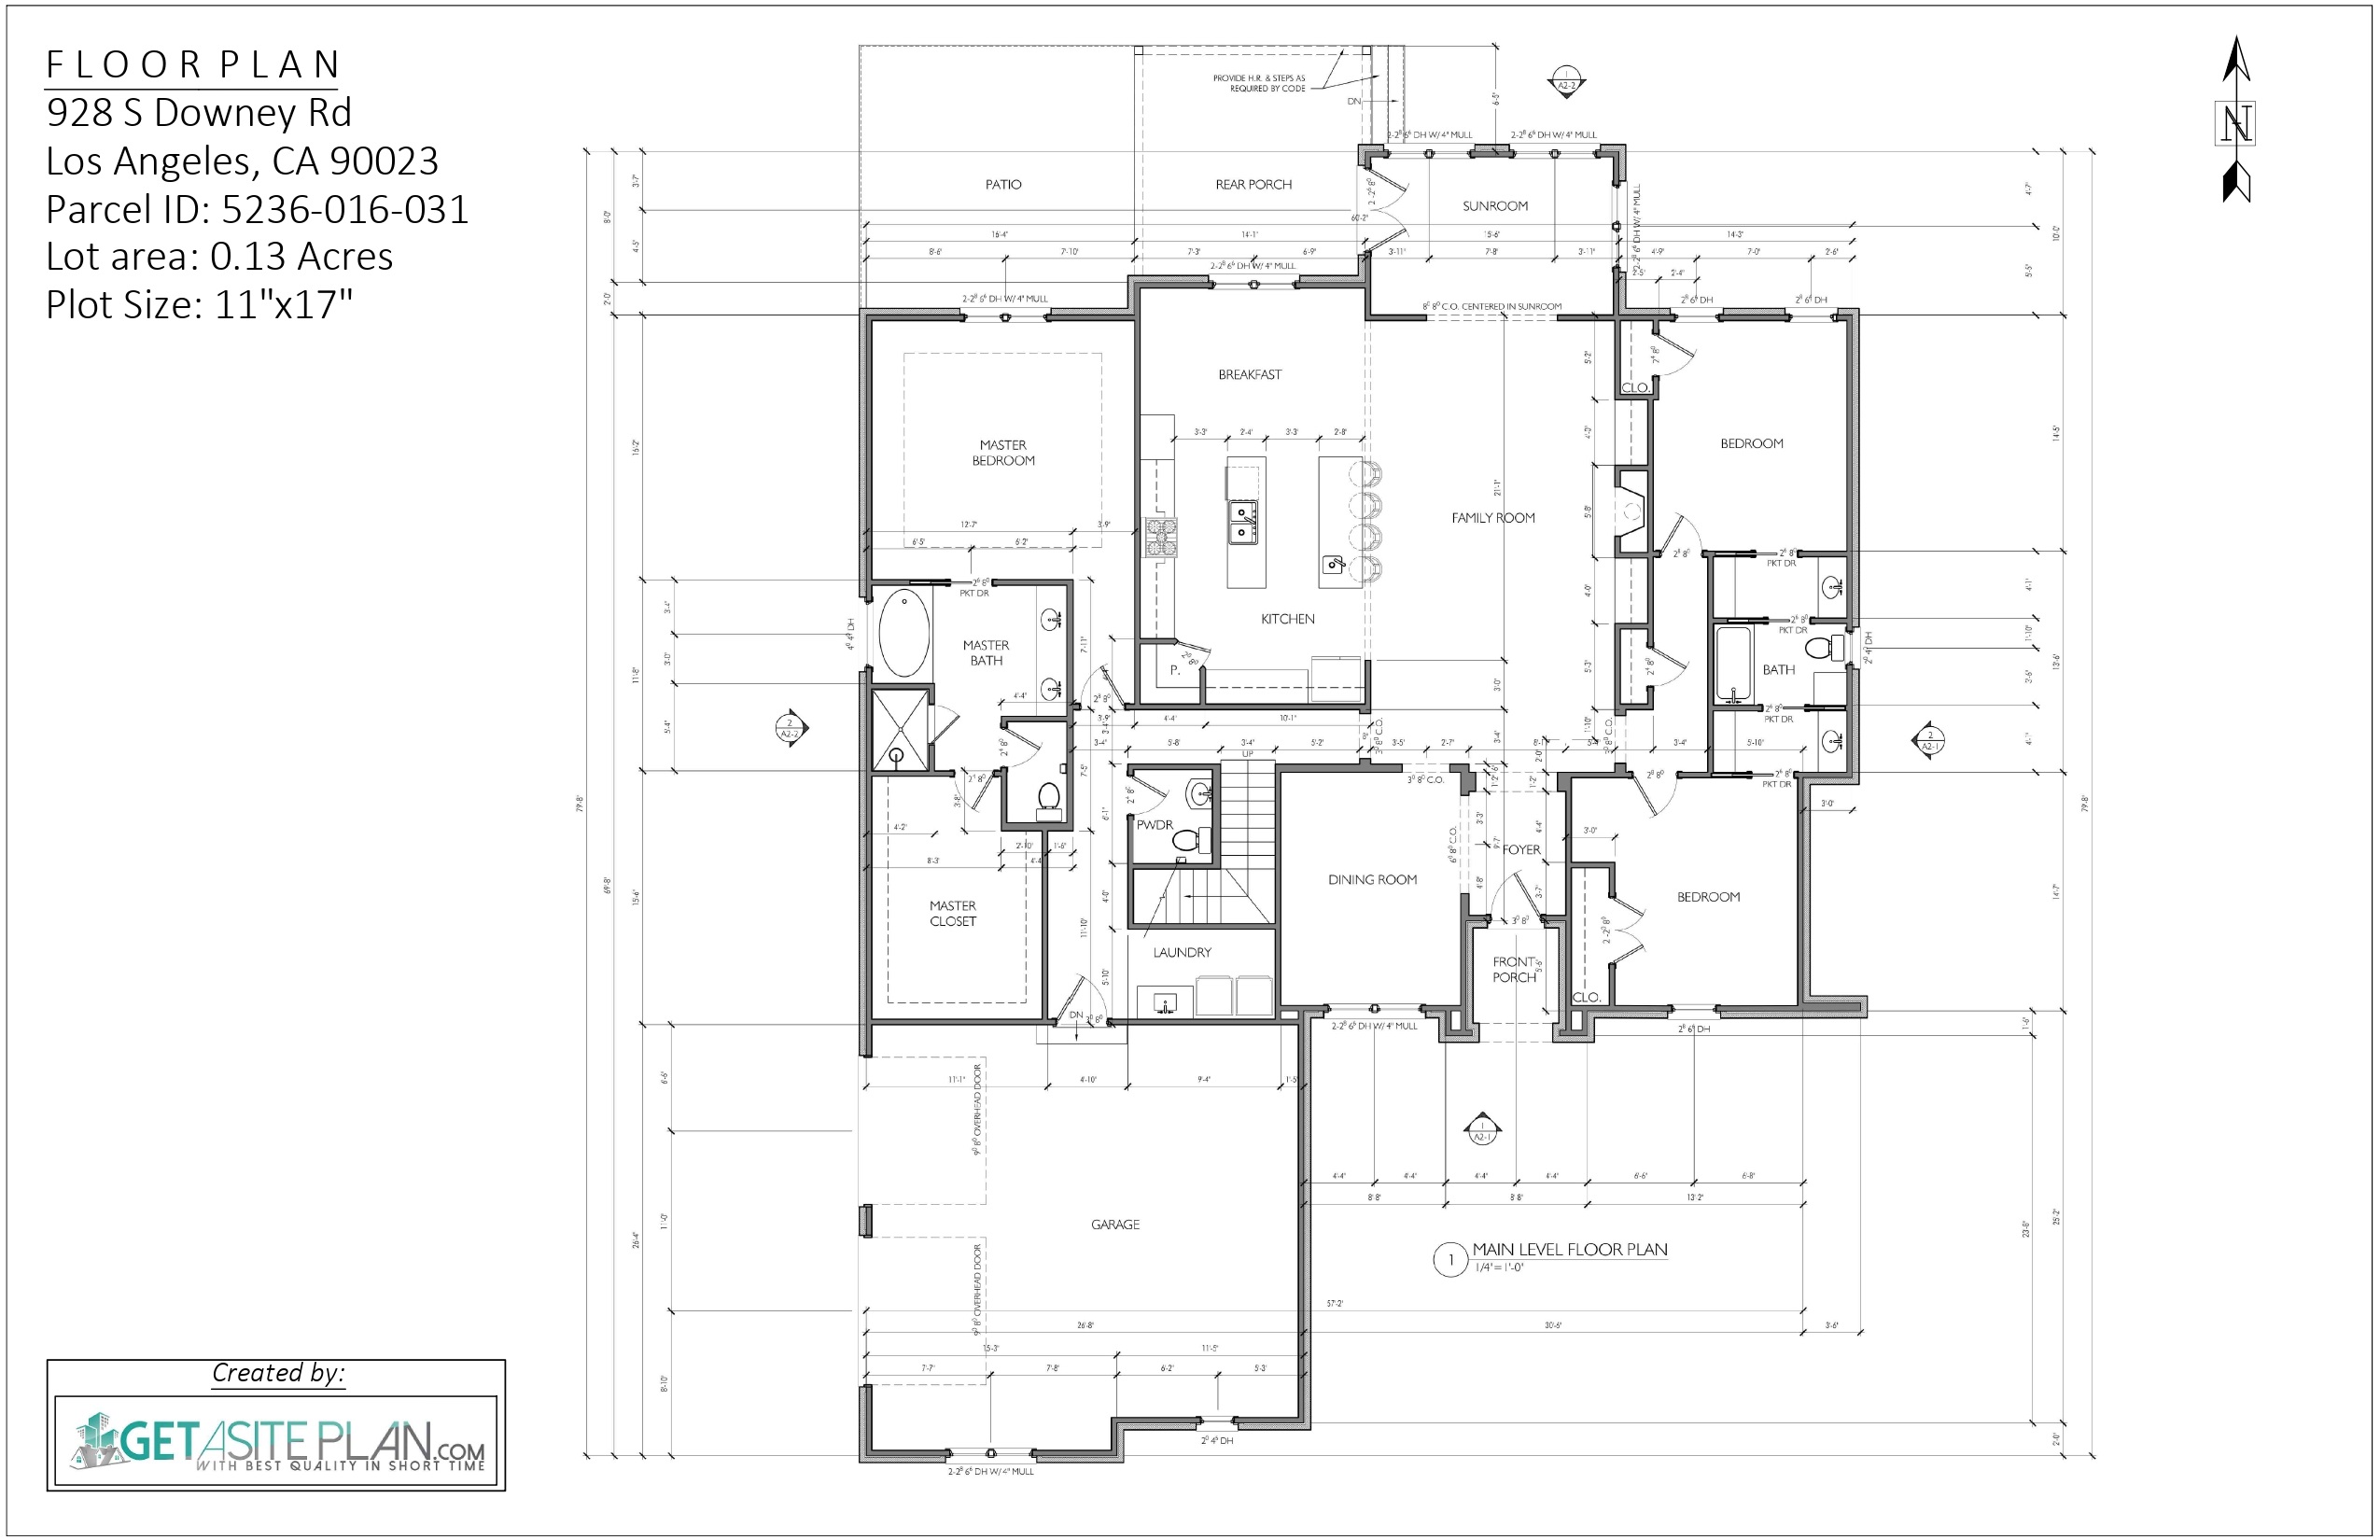 Floor Plans - Get A Site Plans for Permits